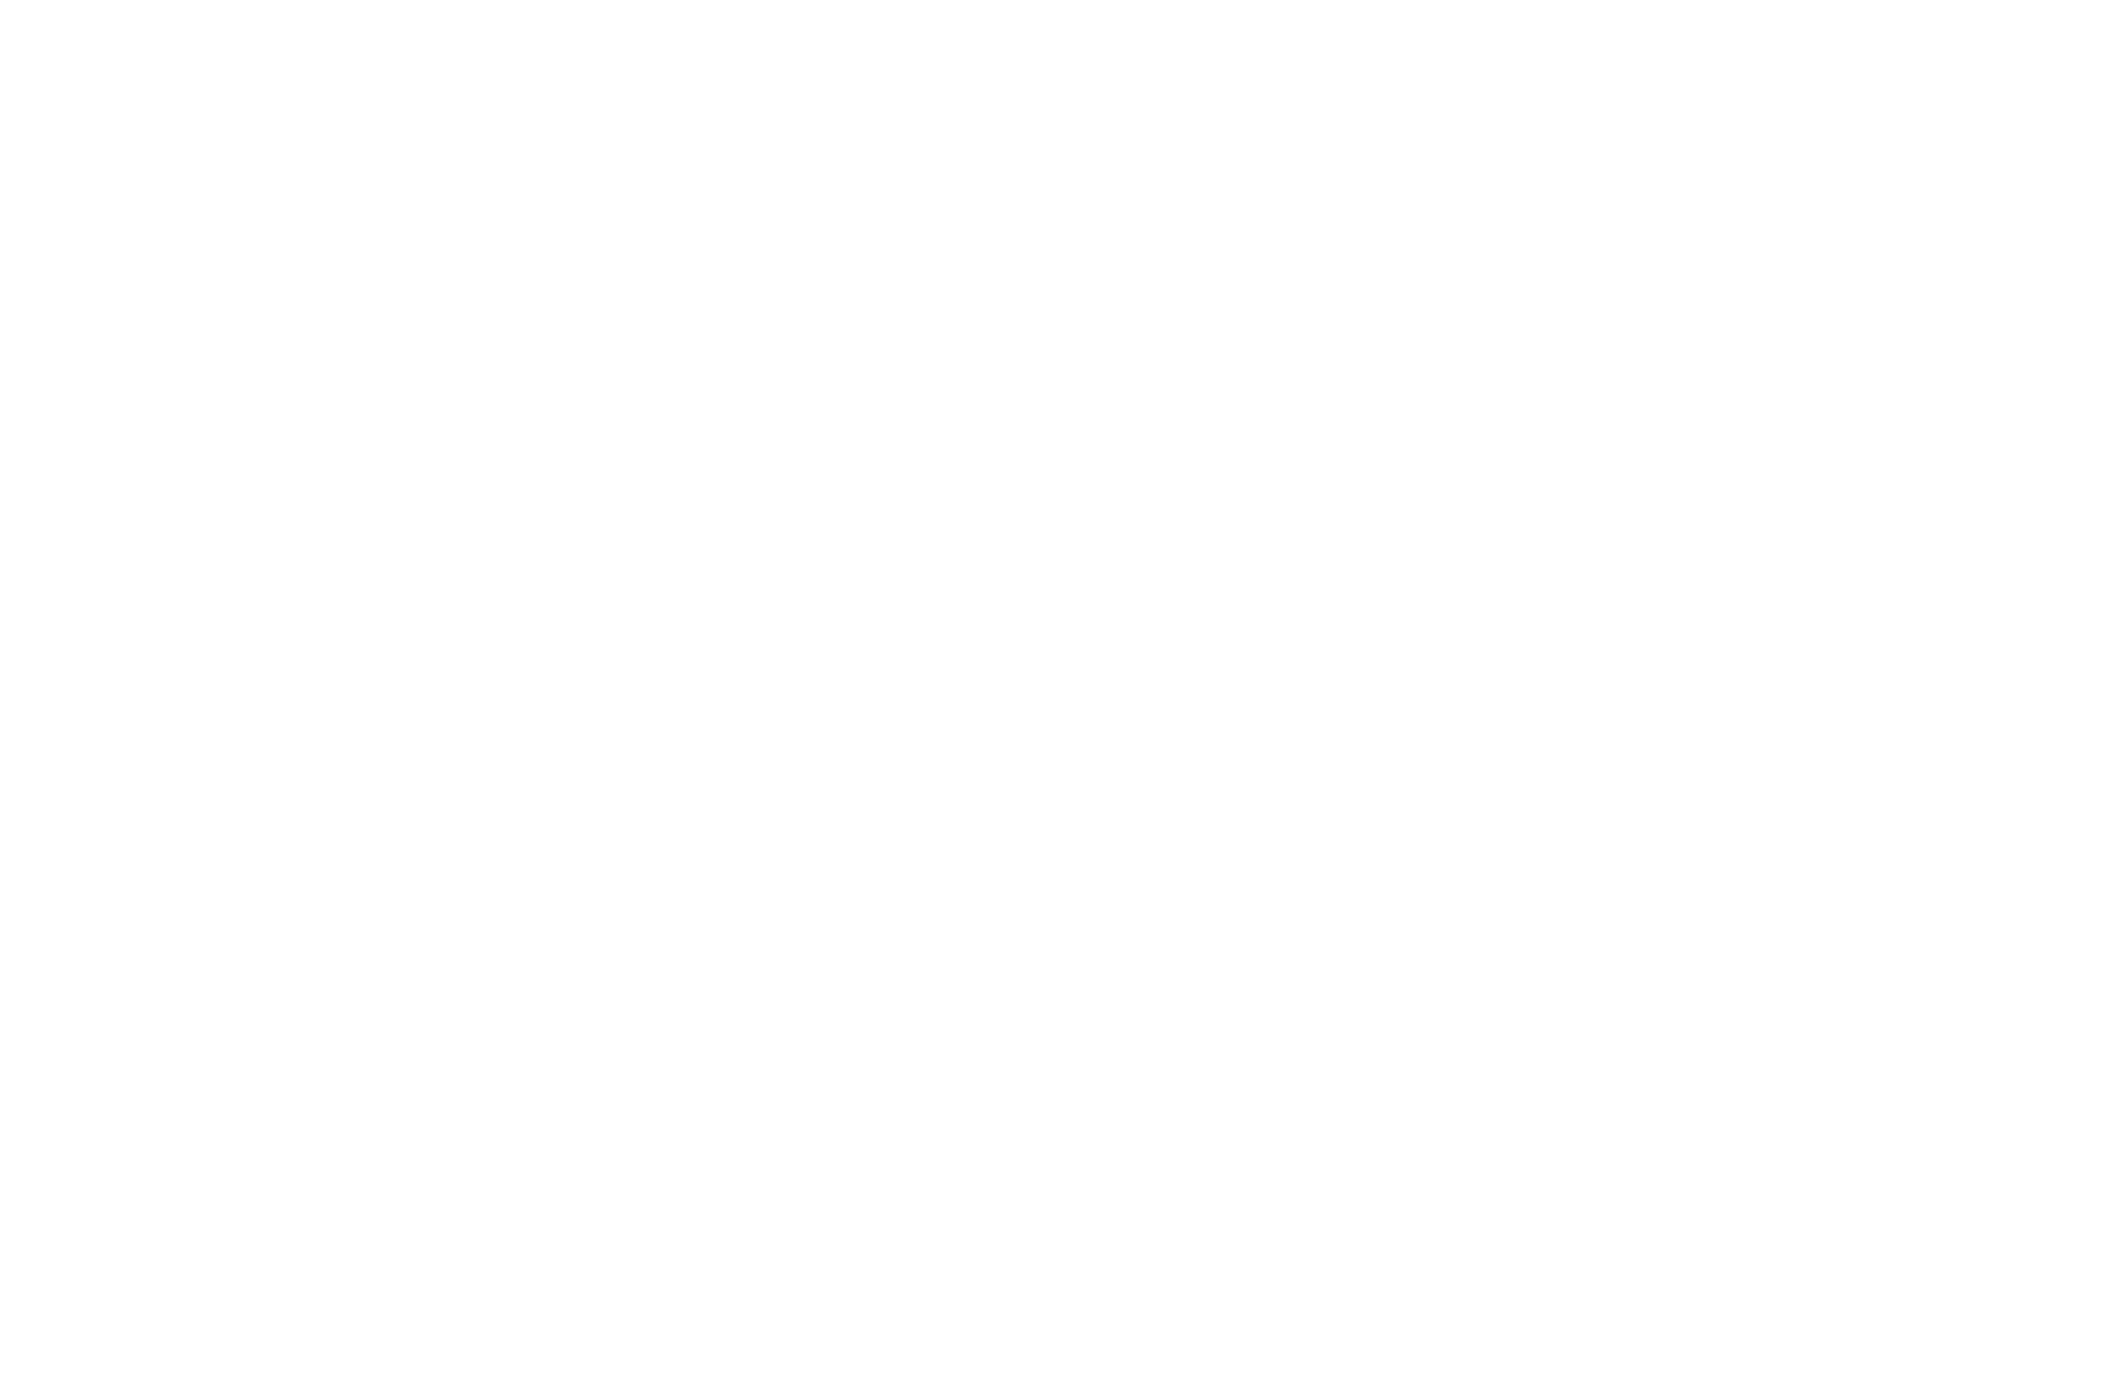 robson home builders logo